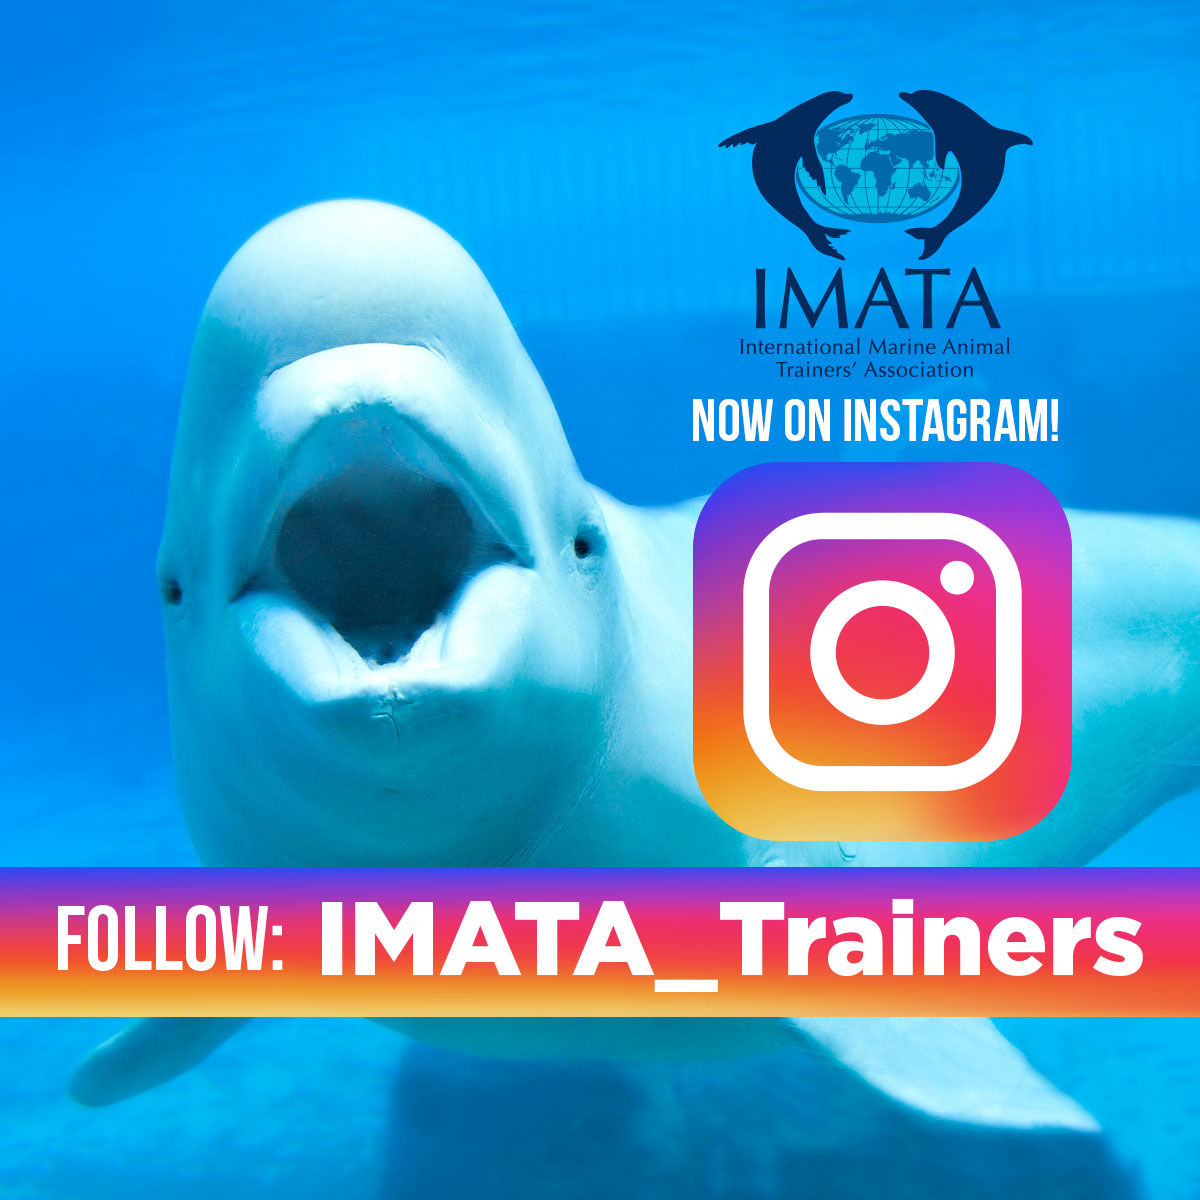 IMATA is now on Instagram!